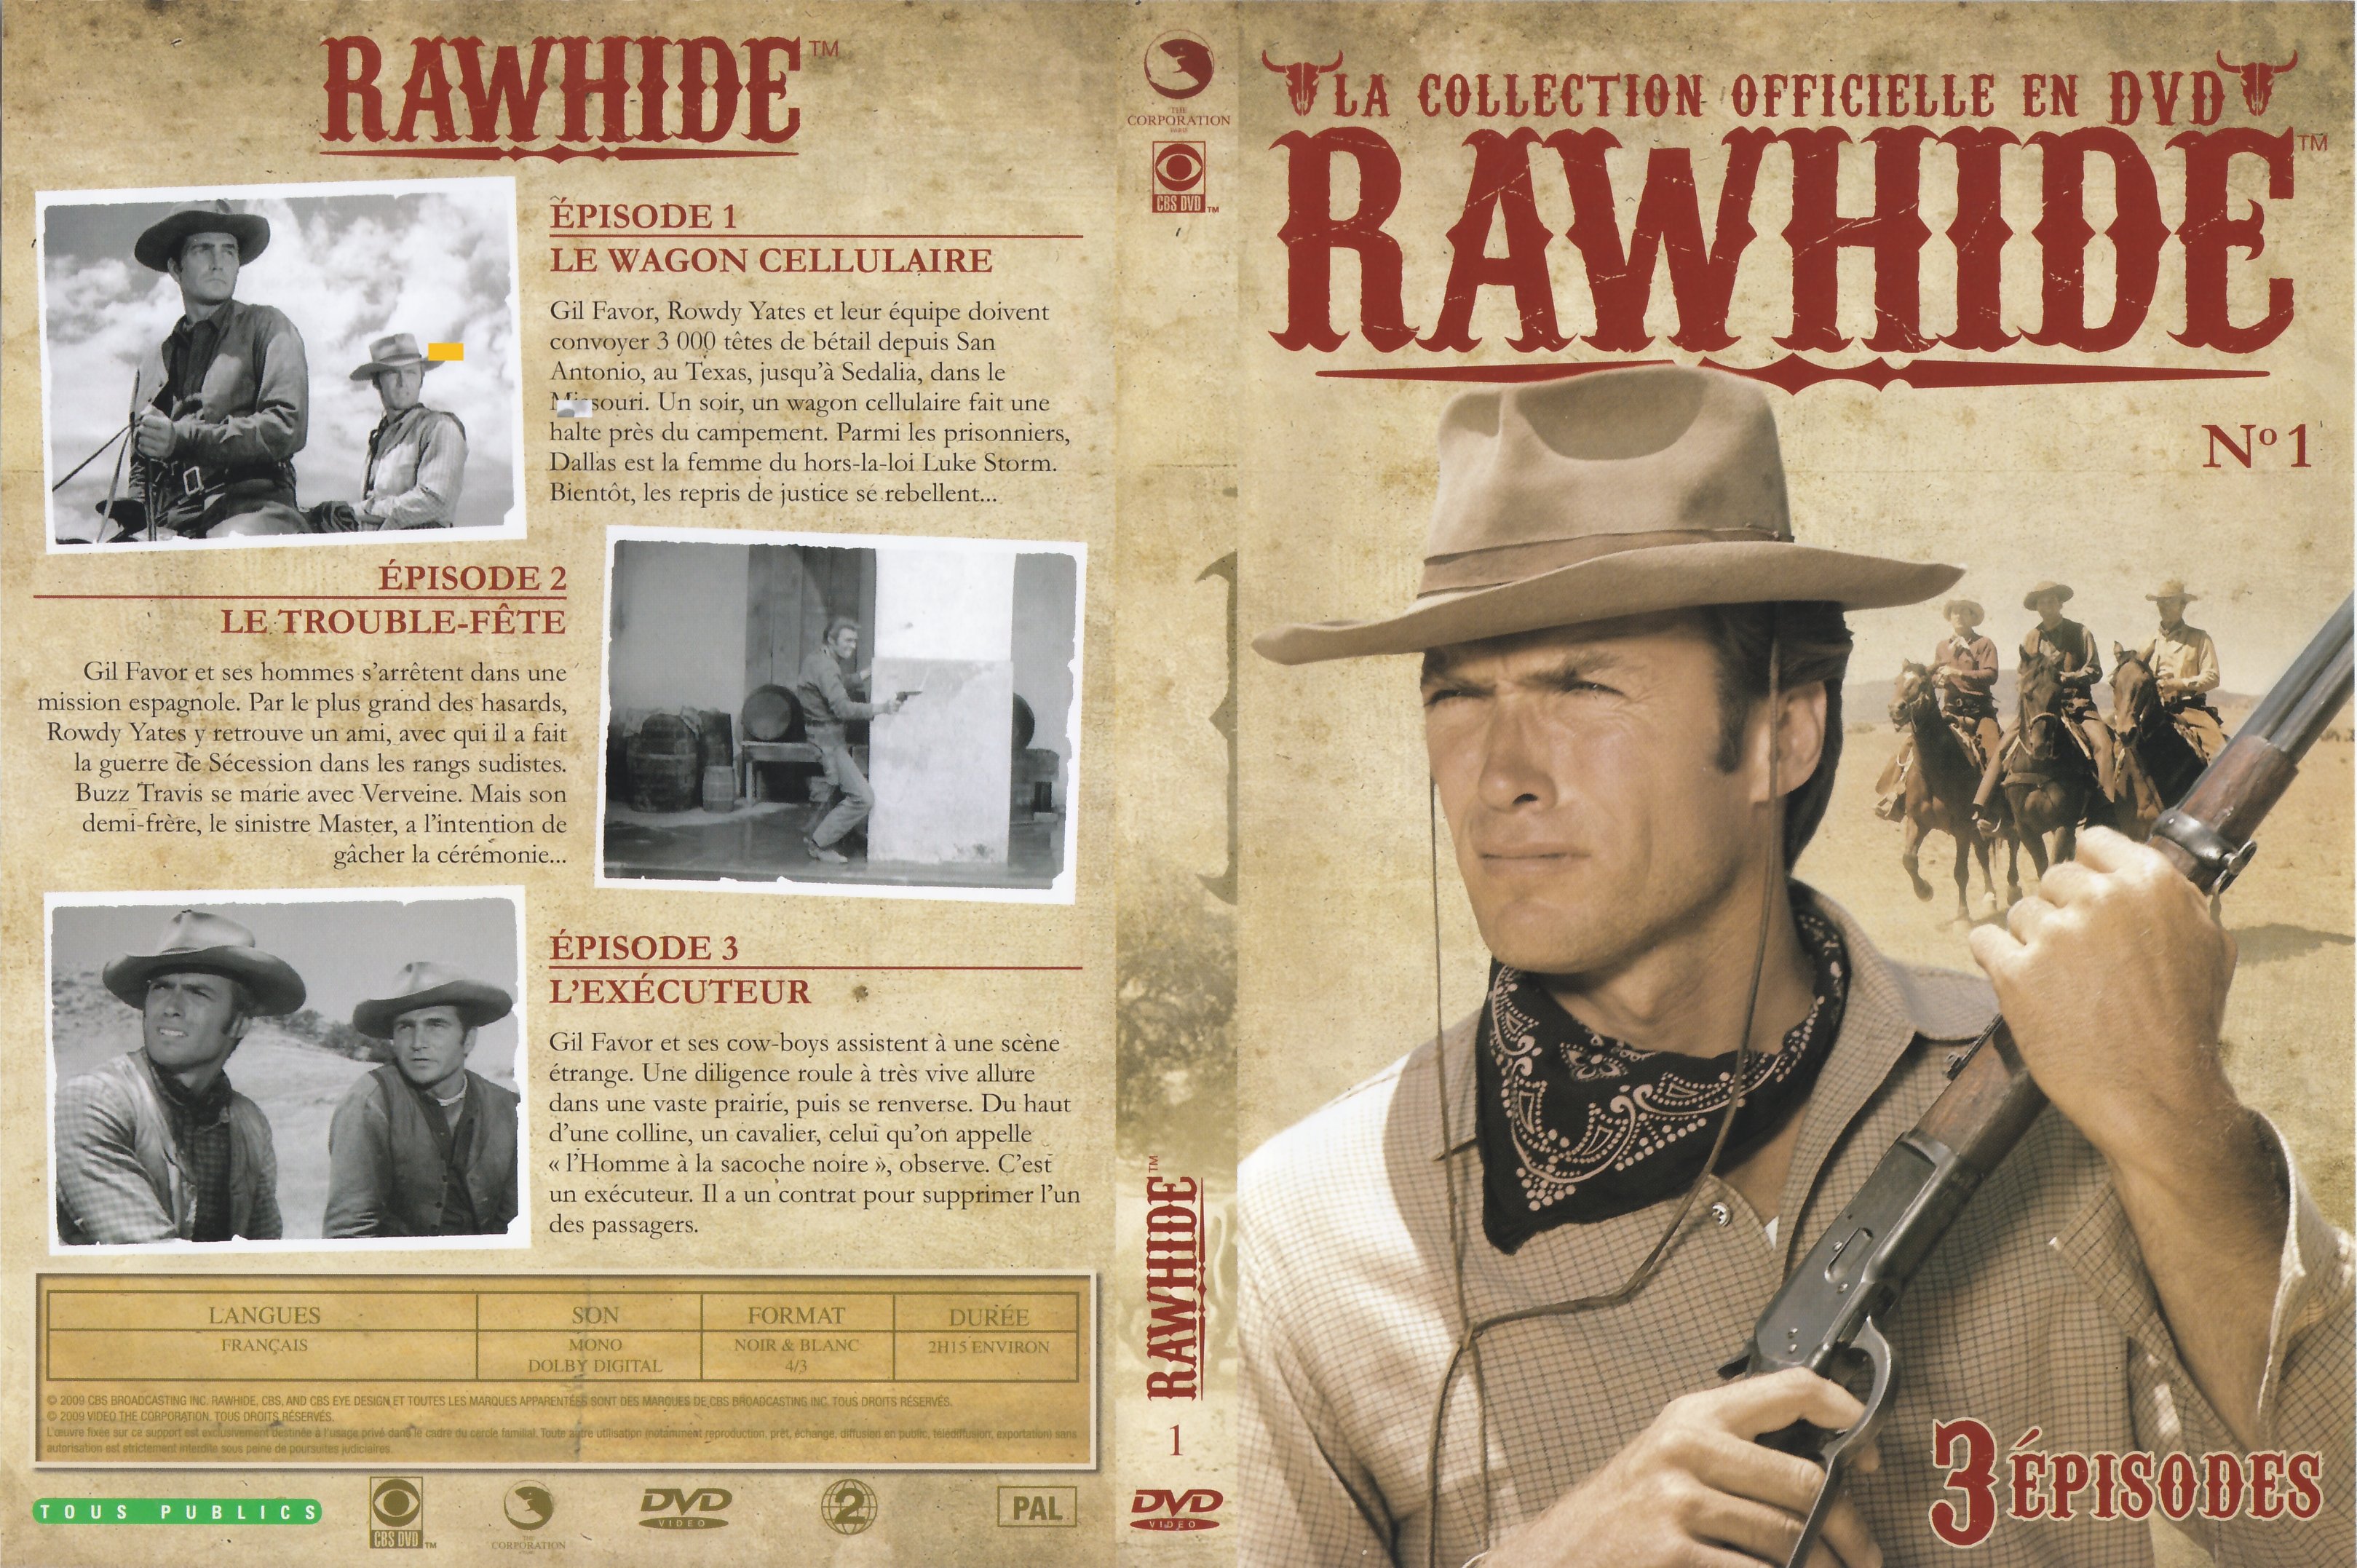 Jaquette DVD Rawhide DVD 01